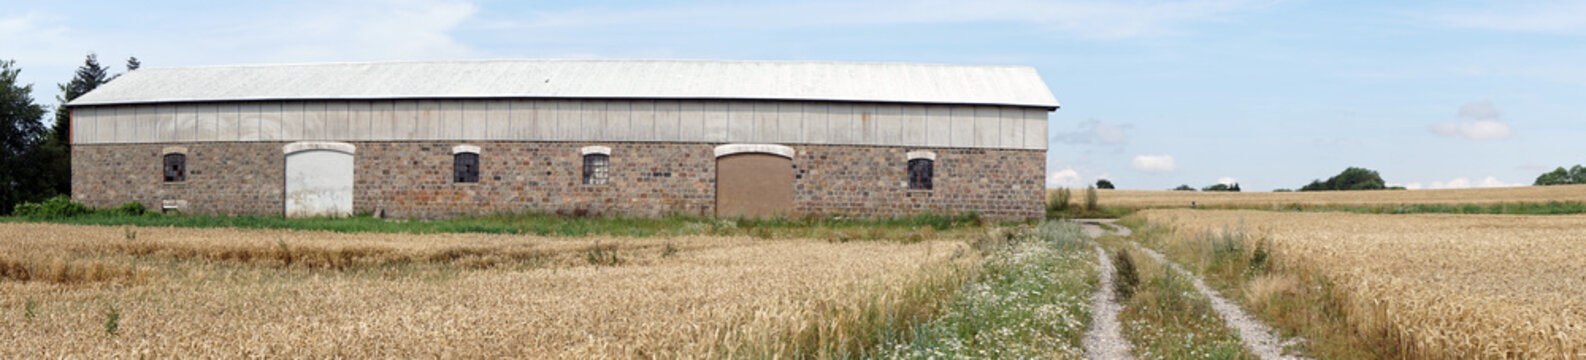 Barn and field